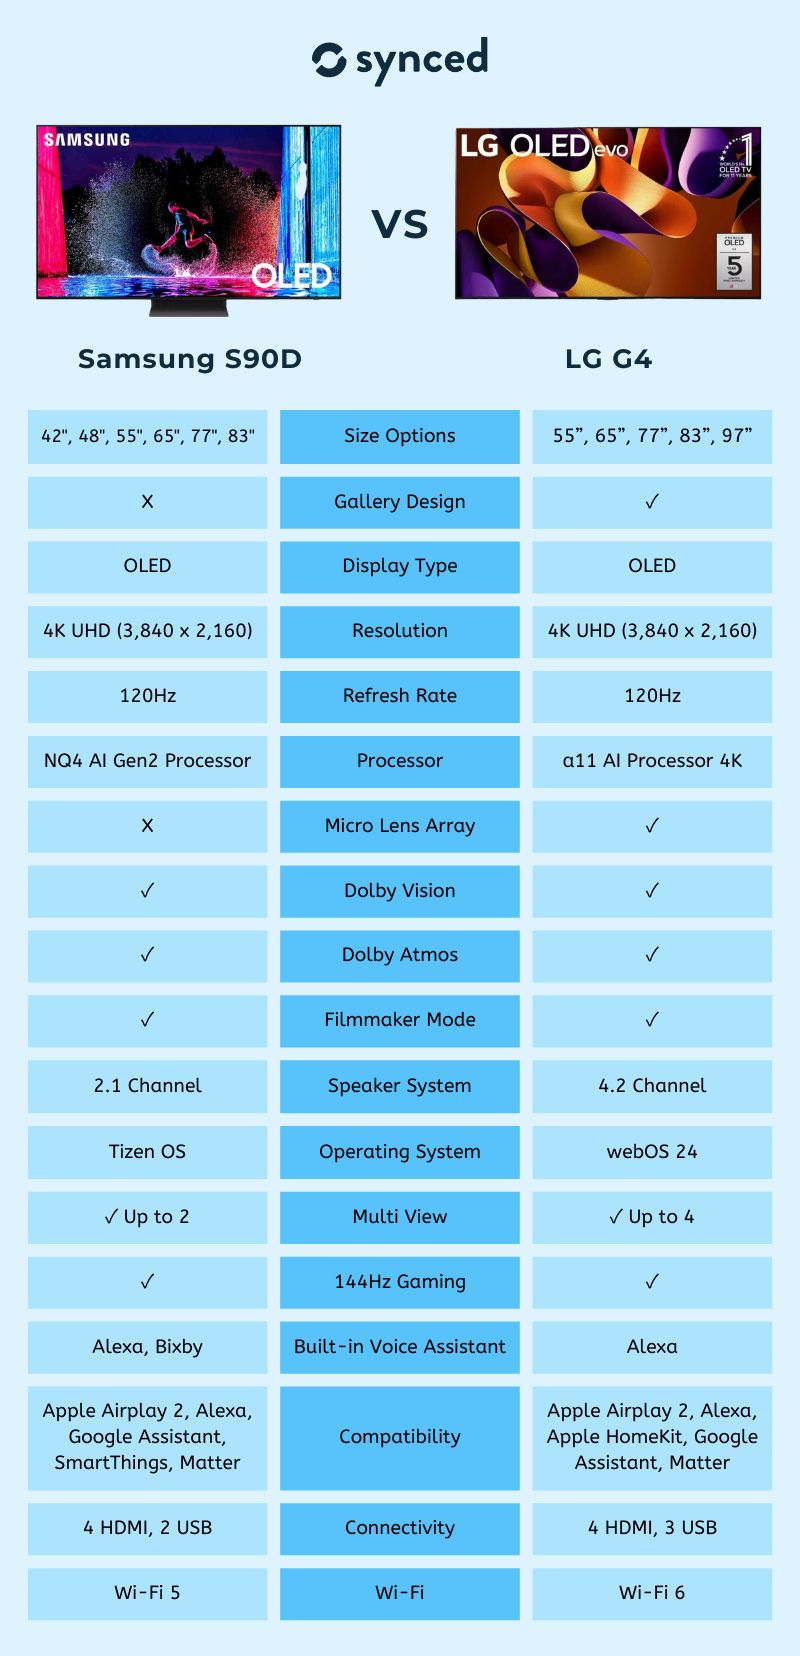 Samsung S90D vs LG G4